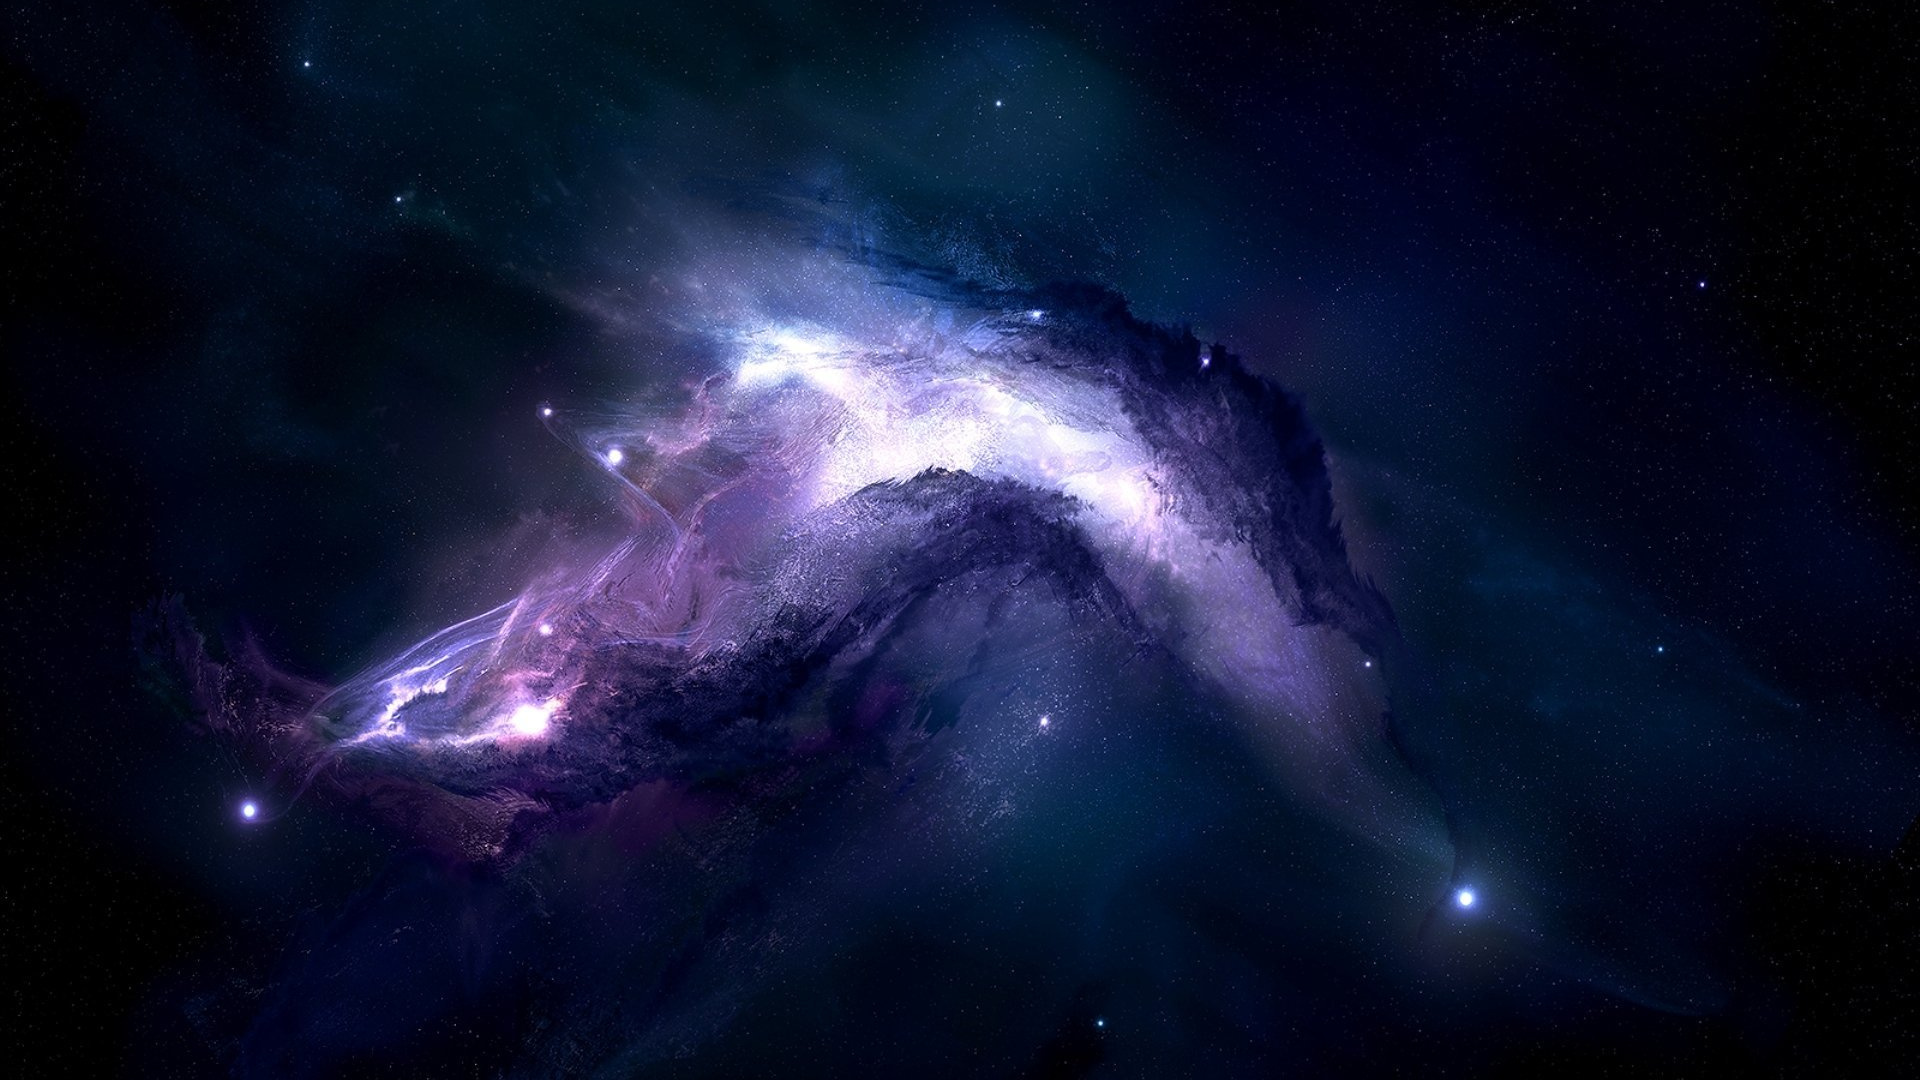 samsung galaxy j2 wallpaper full hd,himmel,nebel,atmosphäre,weltraum,astronomisches objekt